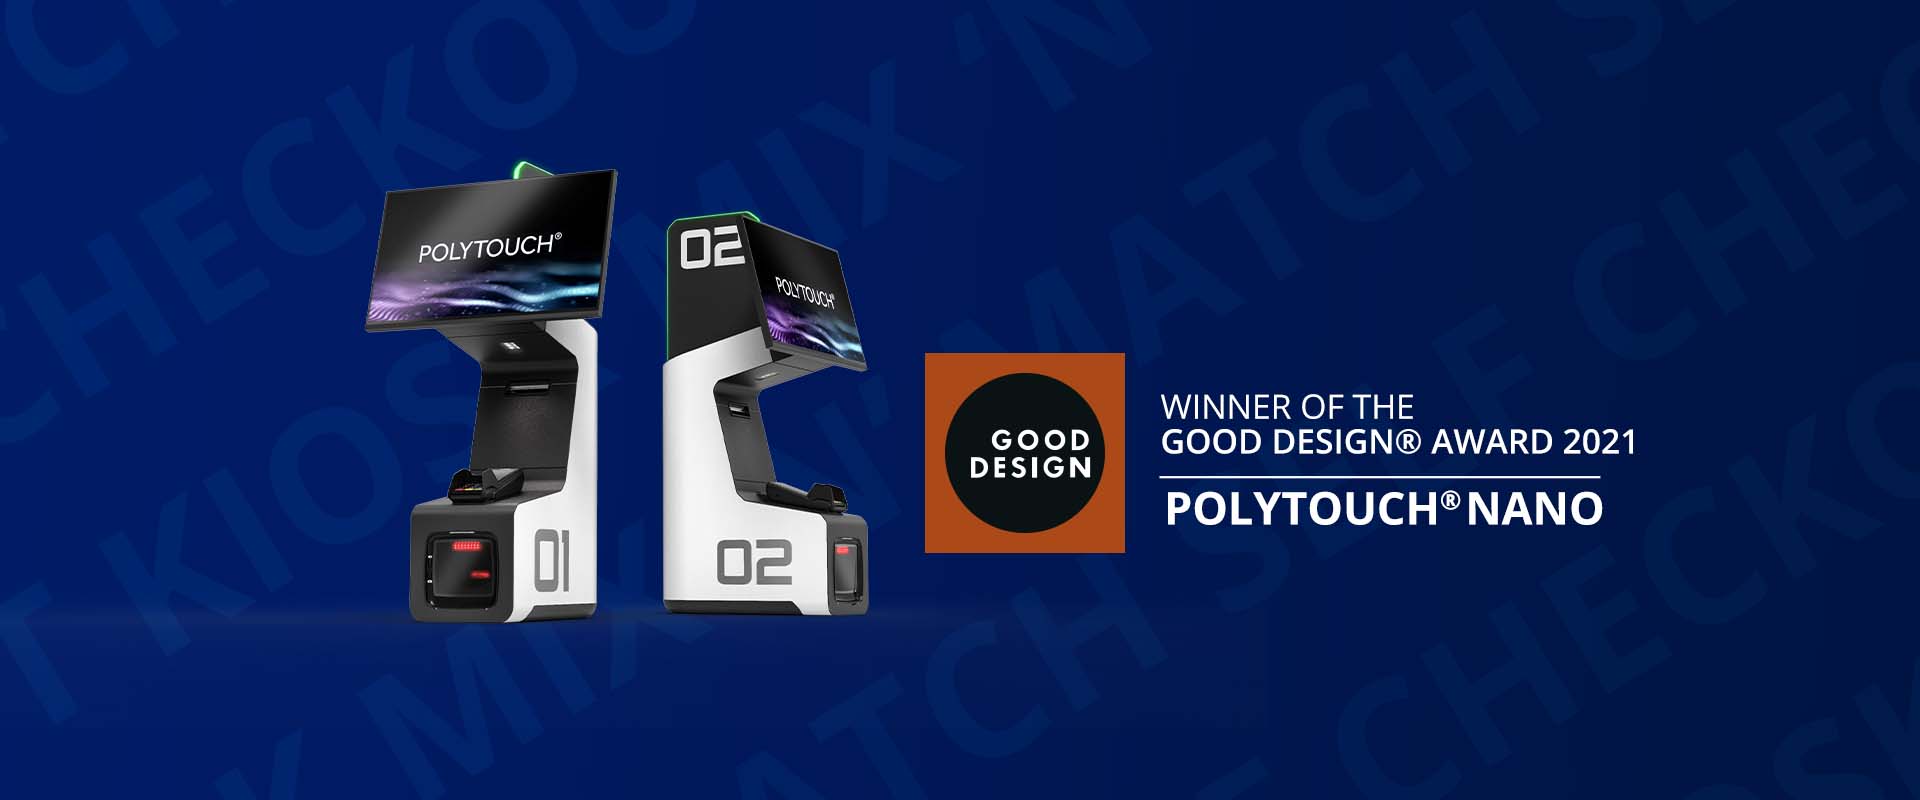 POLYTOUCH® NANO wins the Good Design Award 2021 » Pyramid News